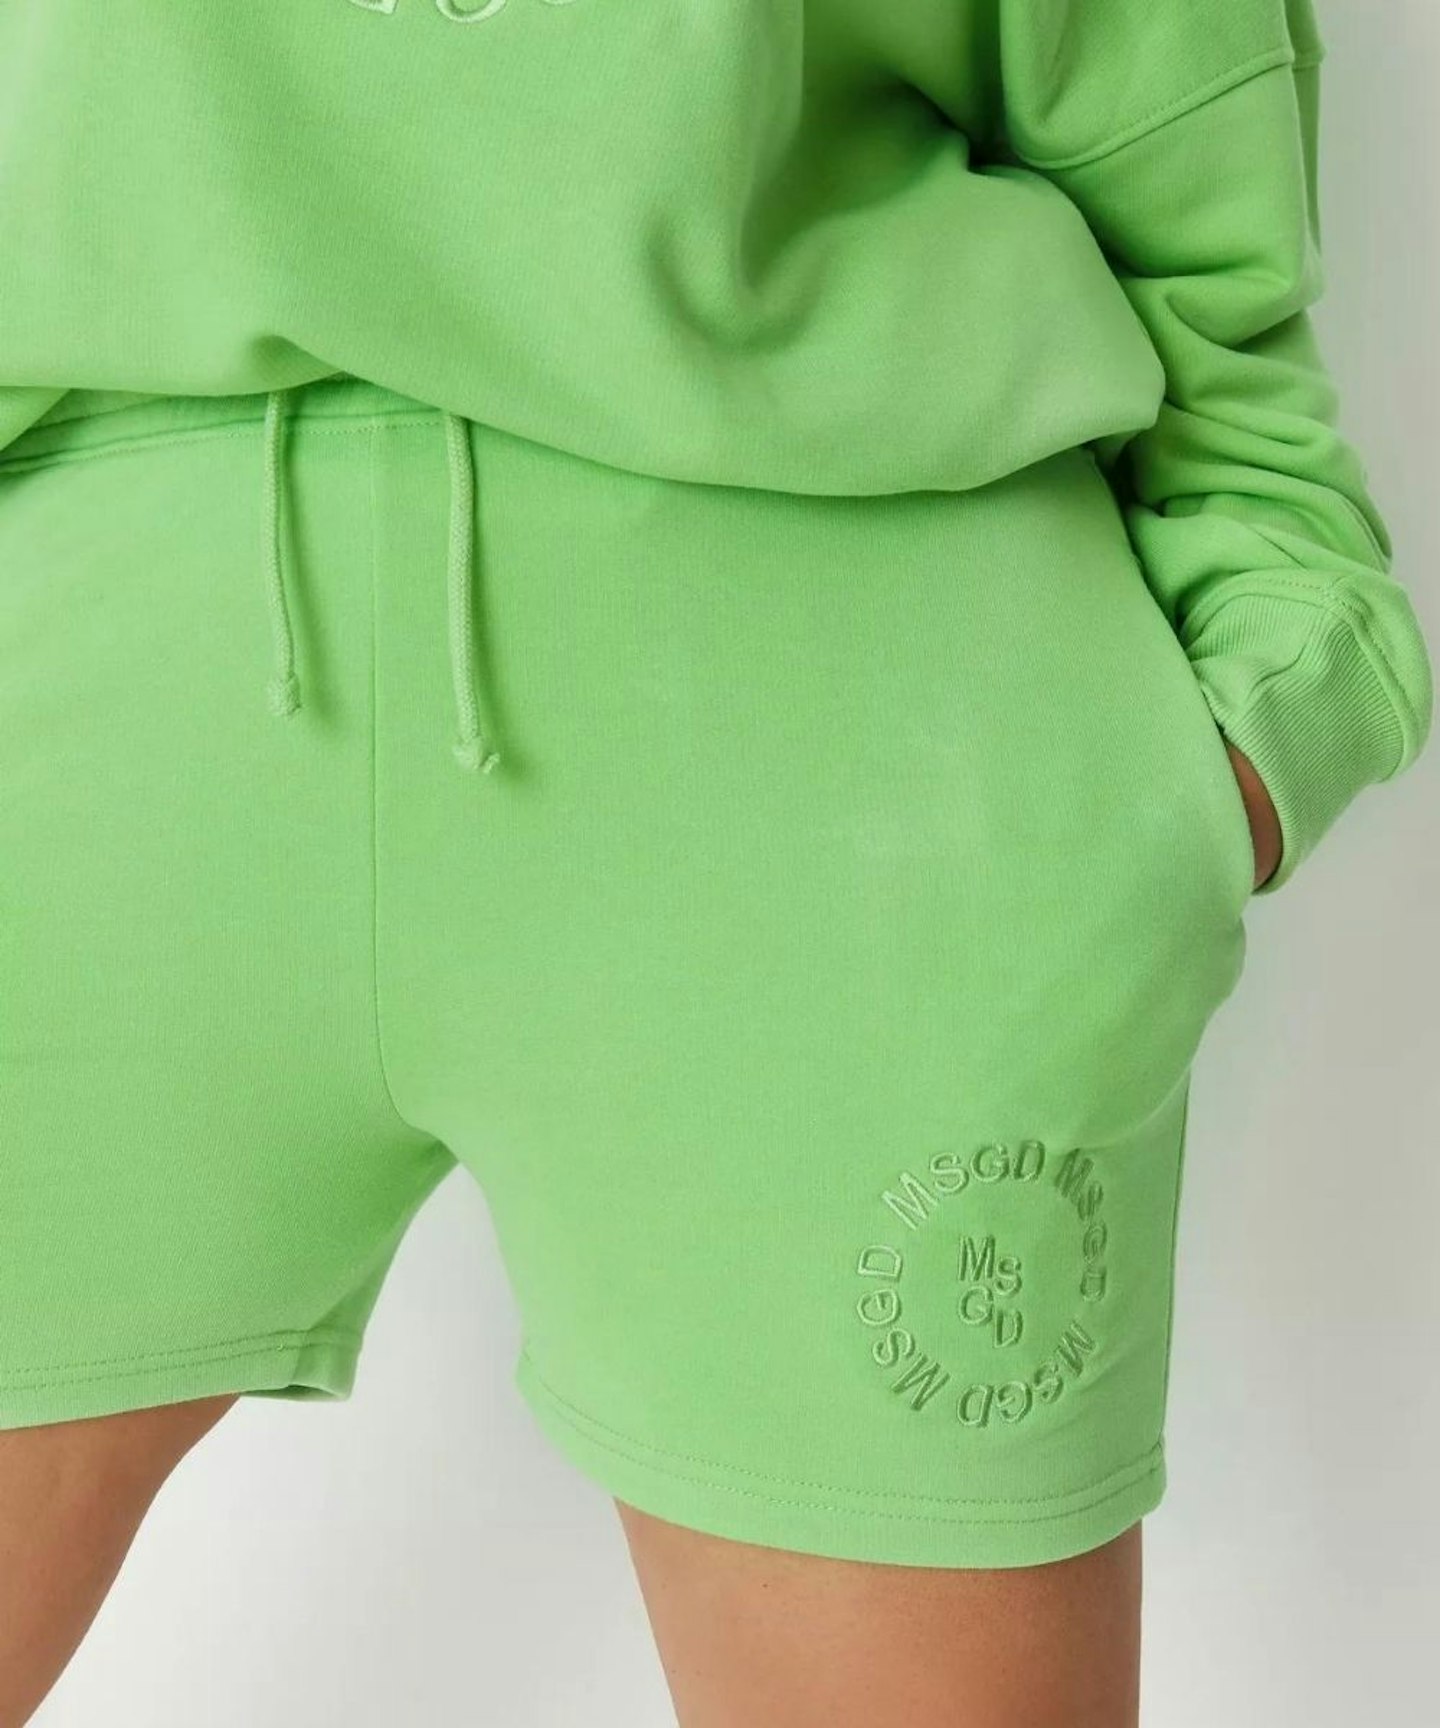 Green MSGD Long Shorts